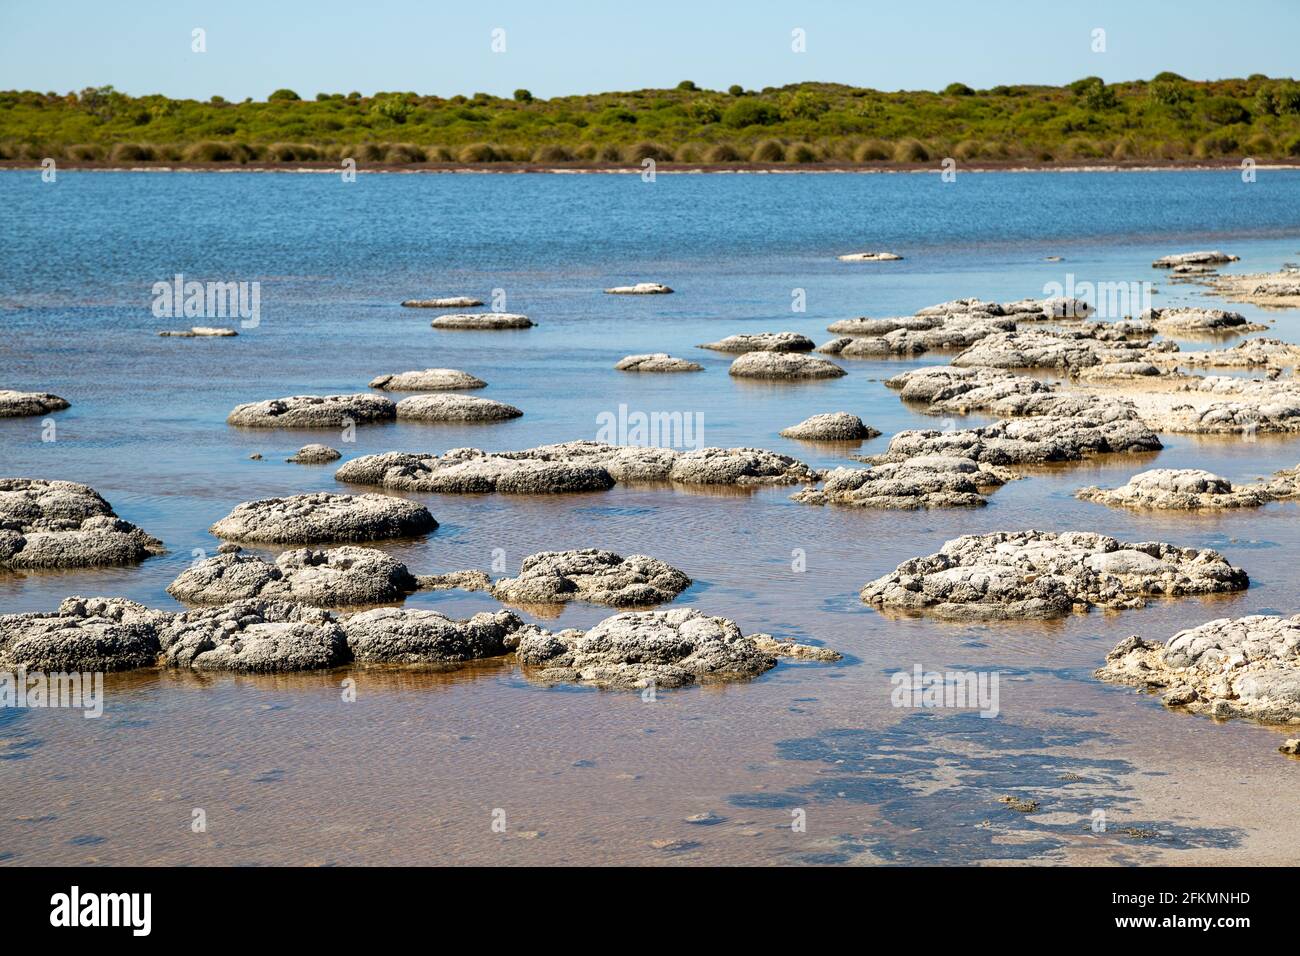 Stromatolithe am Lake Thetis, Cervantes, Westaustralien. Stromatolithen sind die ältesten lebenden Lebensformen auf unserem Planeten Stockfoto